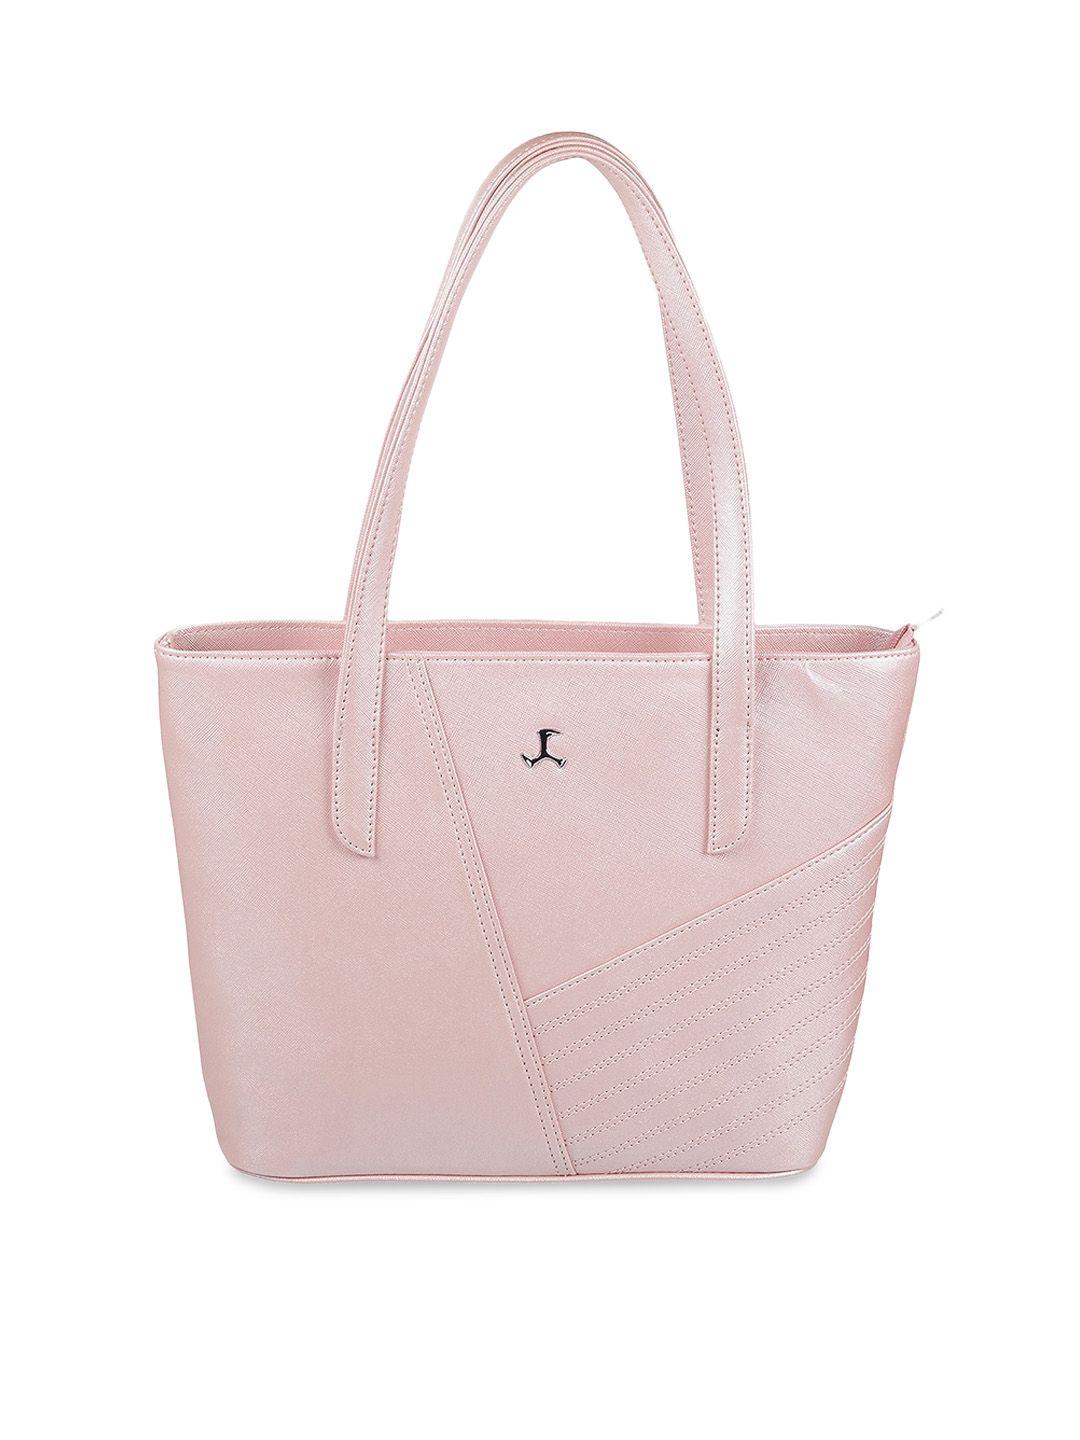 mochi pink shopper tote bag